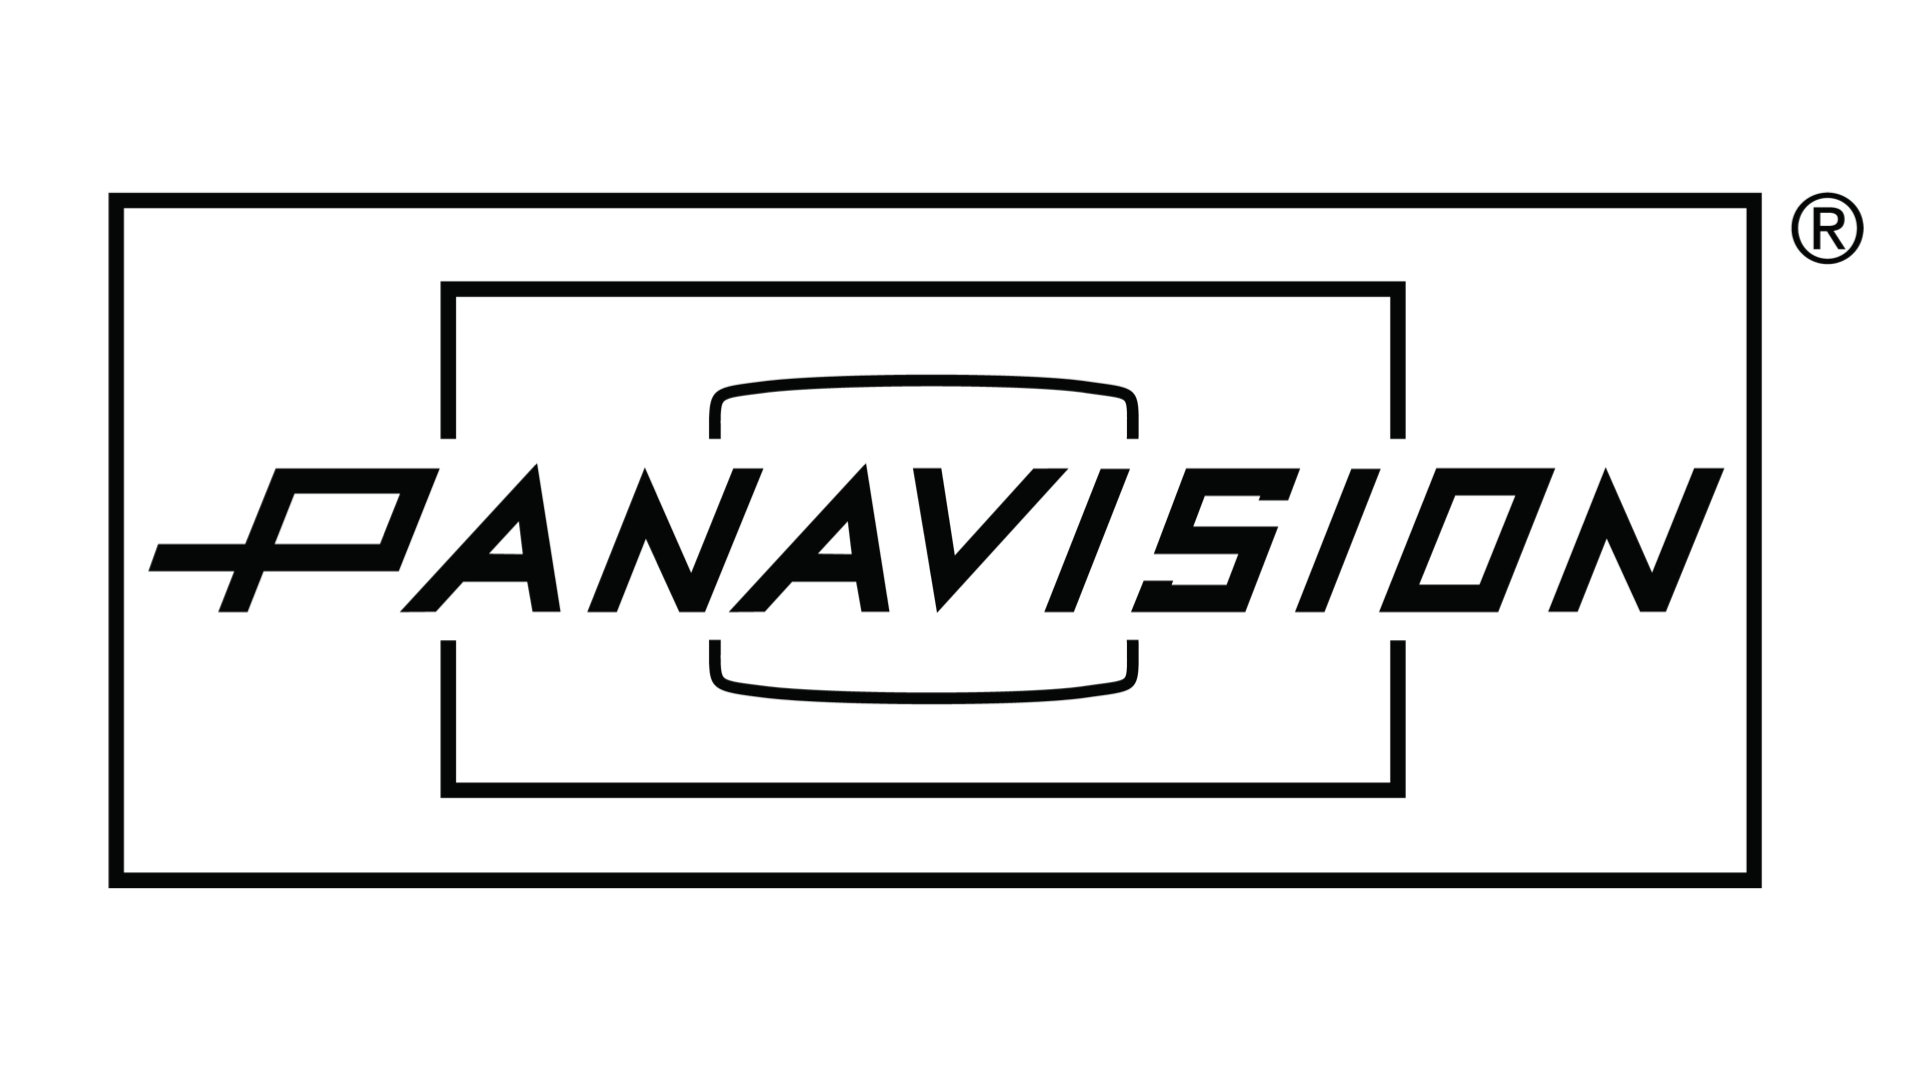 https://panavision.com/images/default-source/articles/images/panavision-logo.001.jpeg?sfvrsn=efeb28a8_3